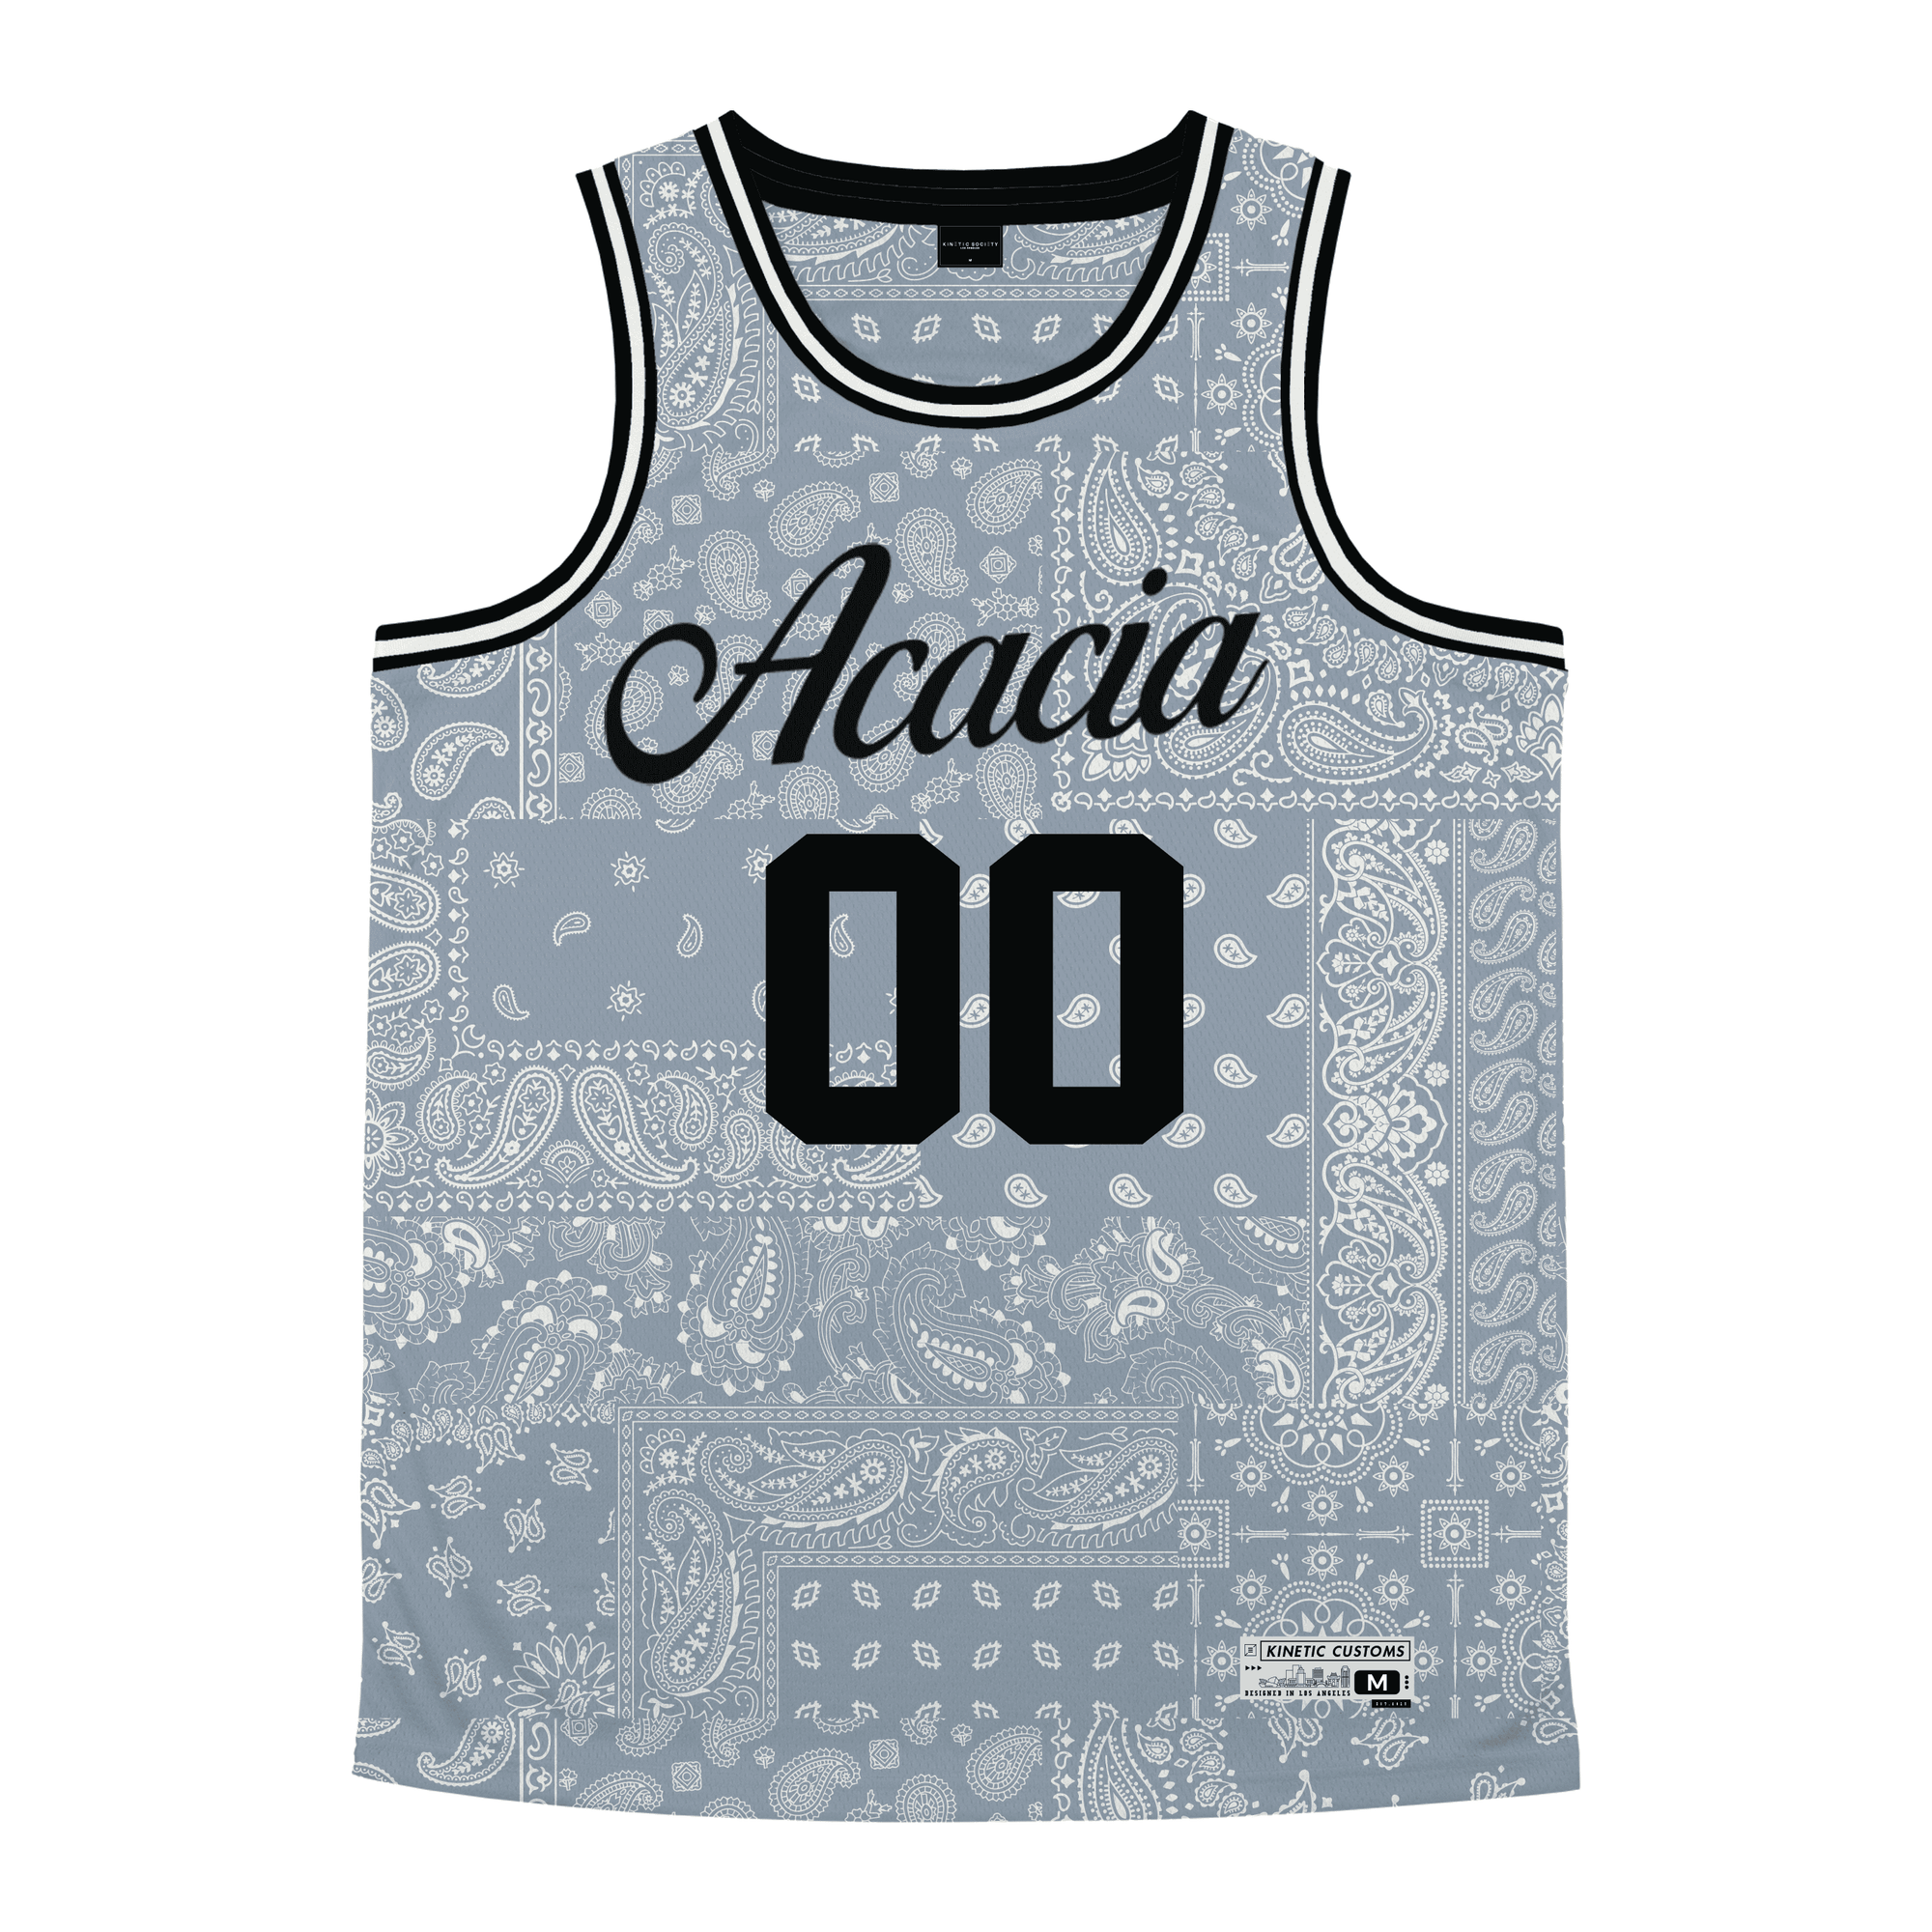 Acacia - Slate Bandana - Basketball Jersey